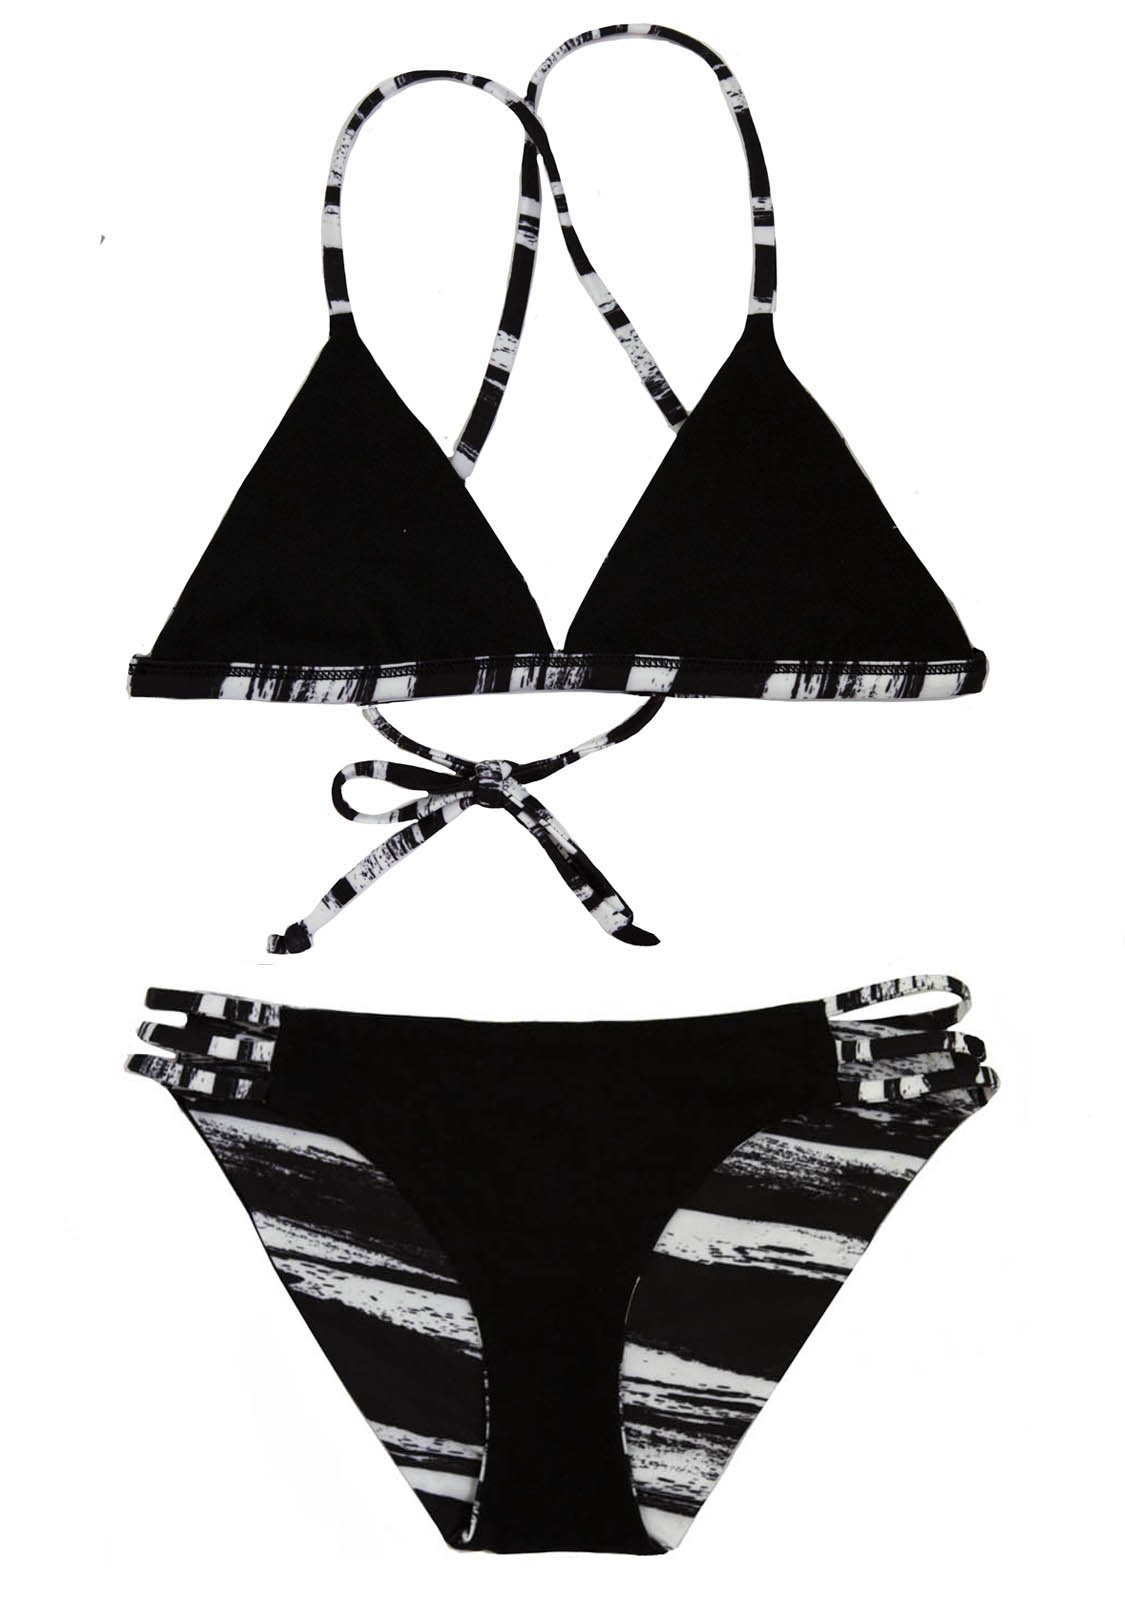 DRIFTWOOD - REVERSIBLE 2 Piece Girls Bikini Swimsuit TWO PIECE Bikini Set Chance Loves 